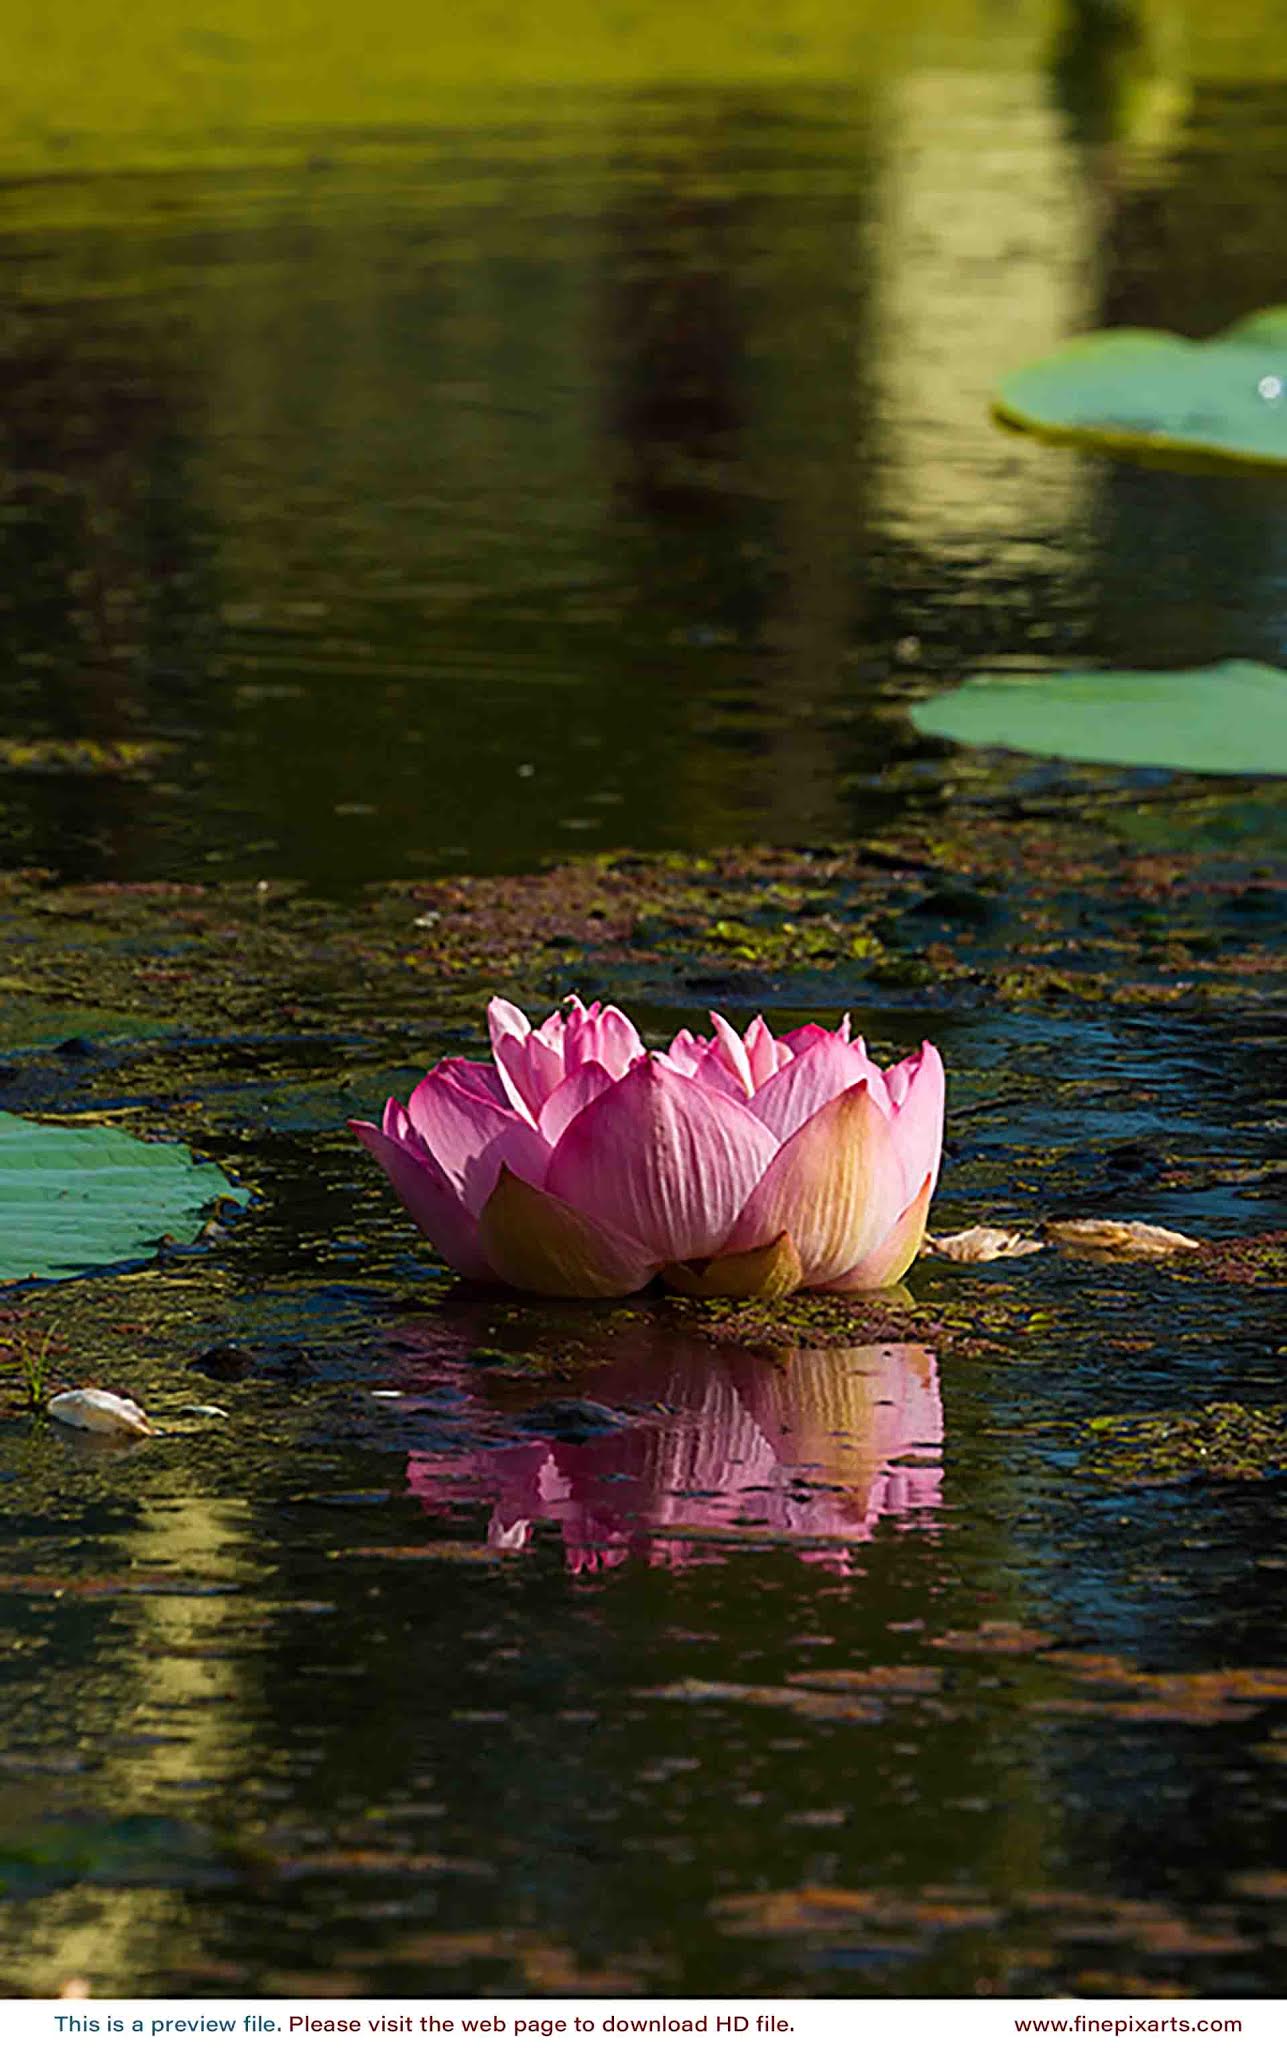 Lotus flower 00044